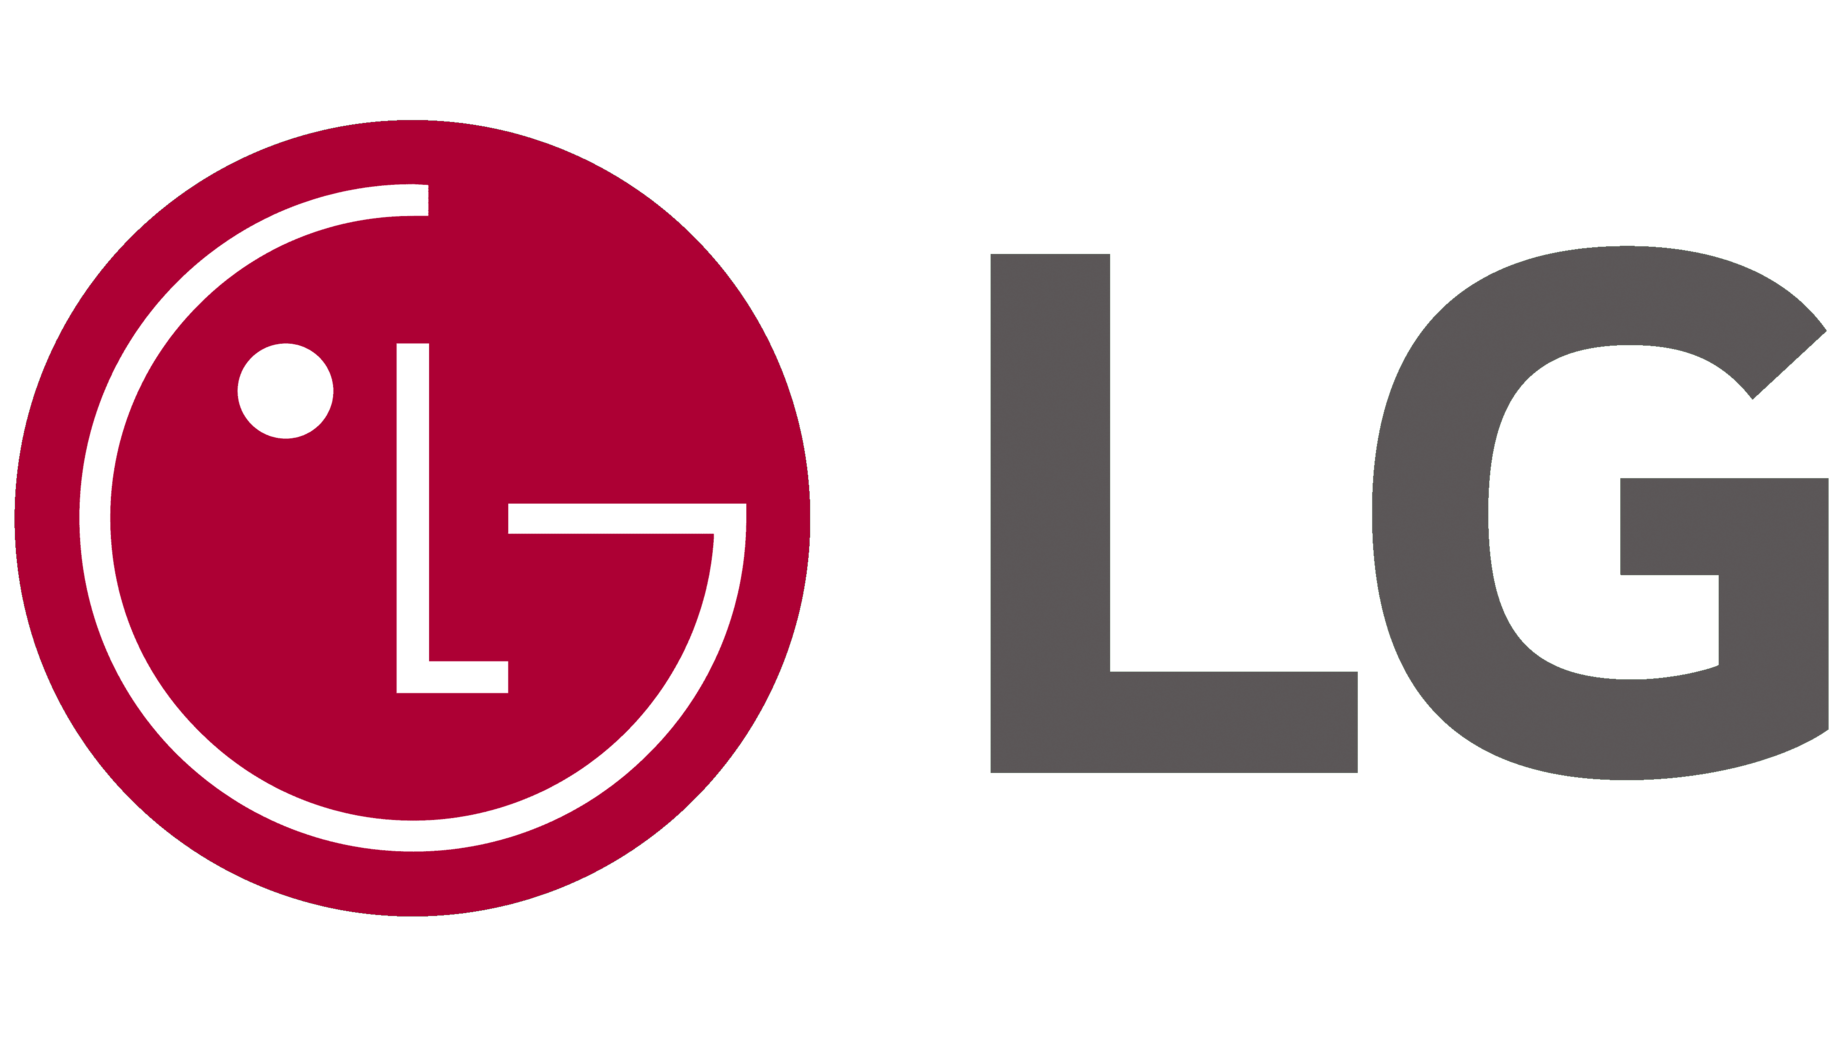 Lg symbol